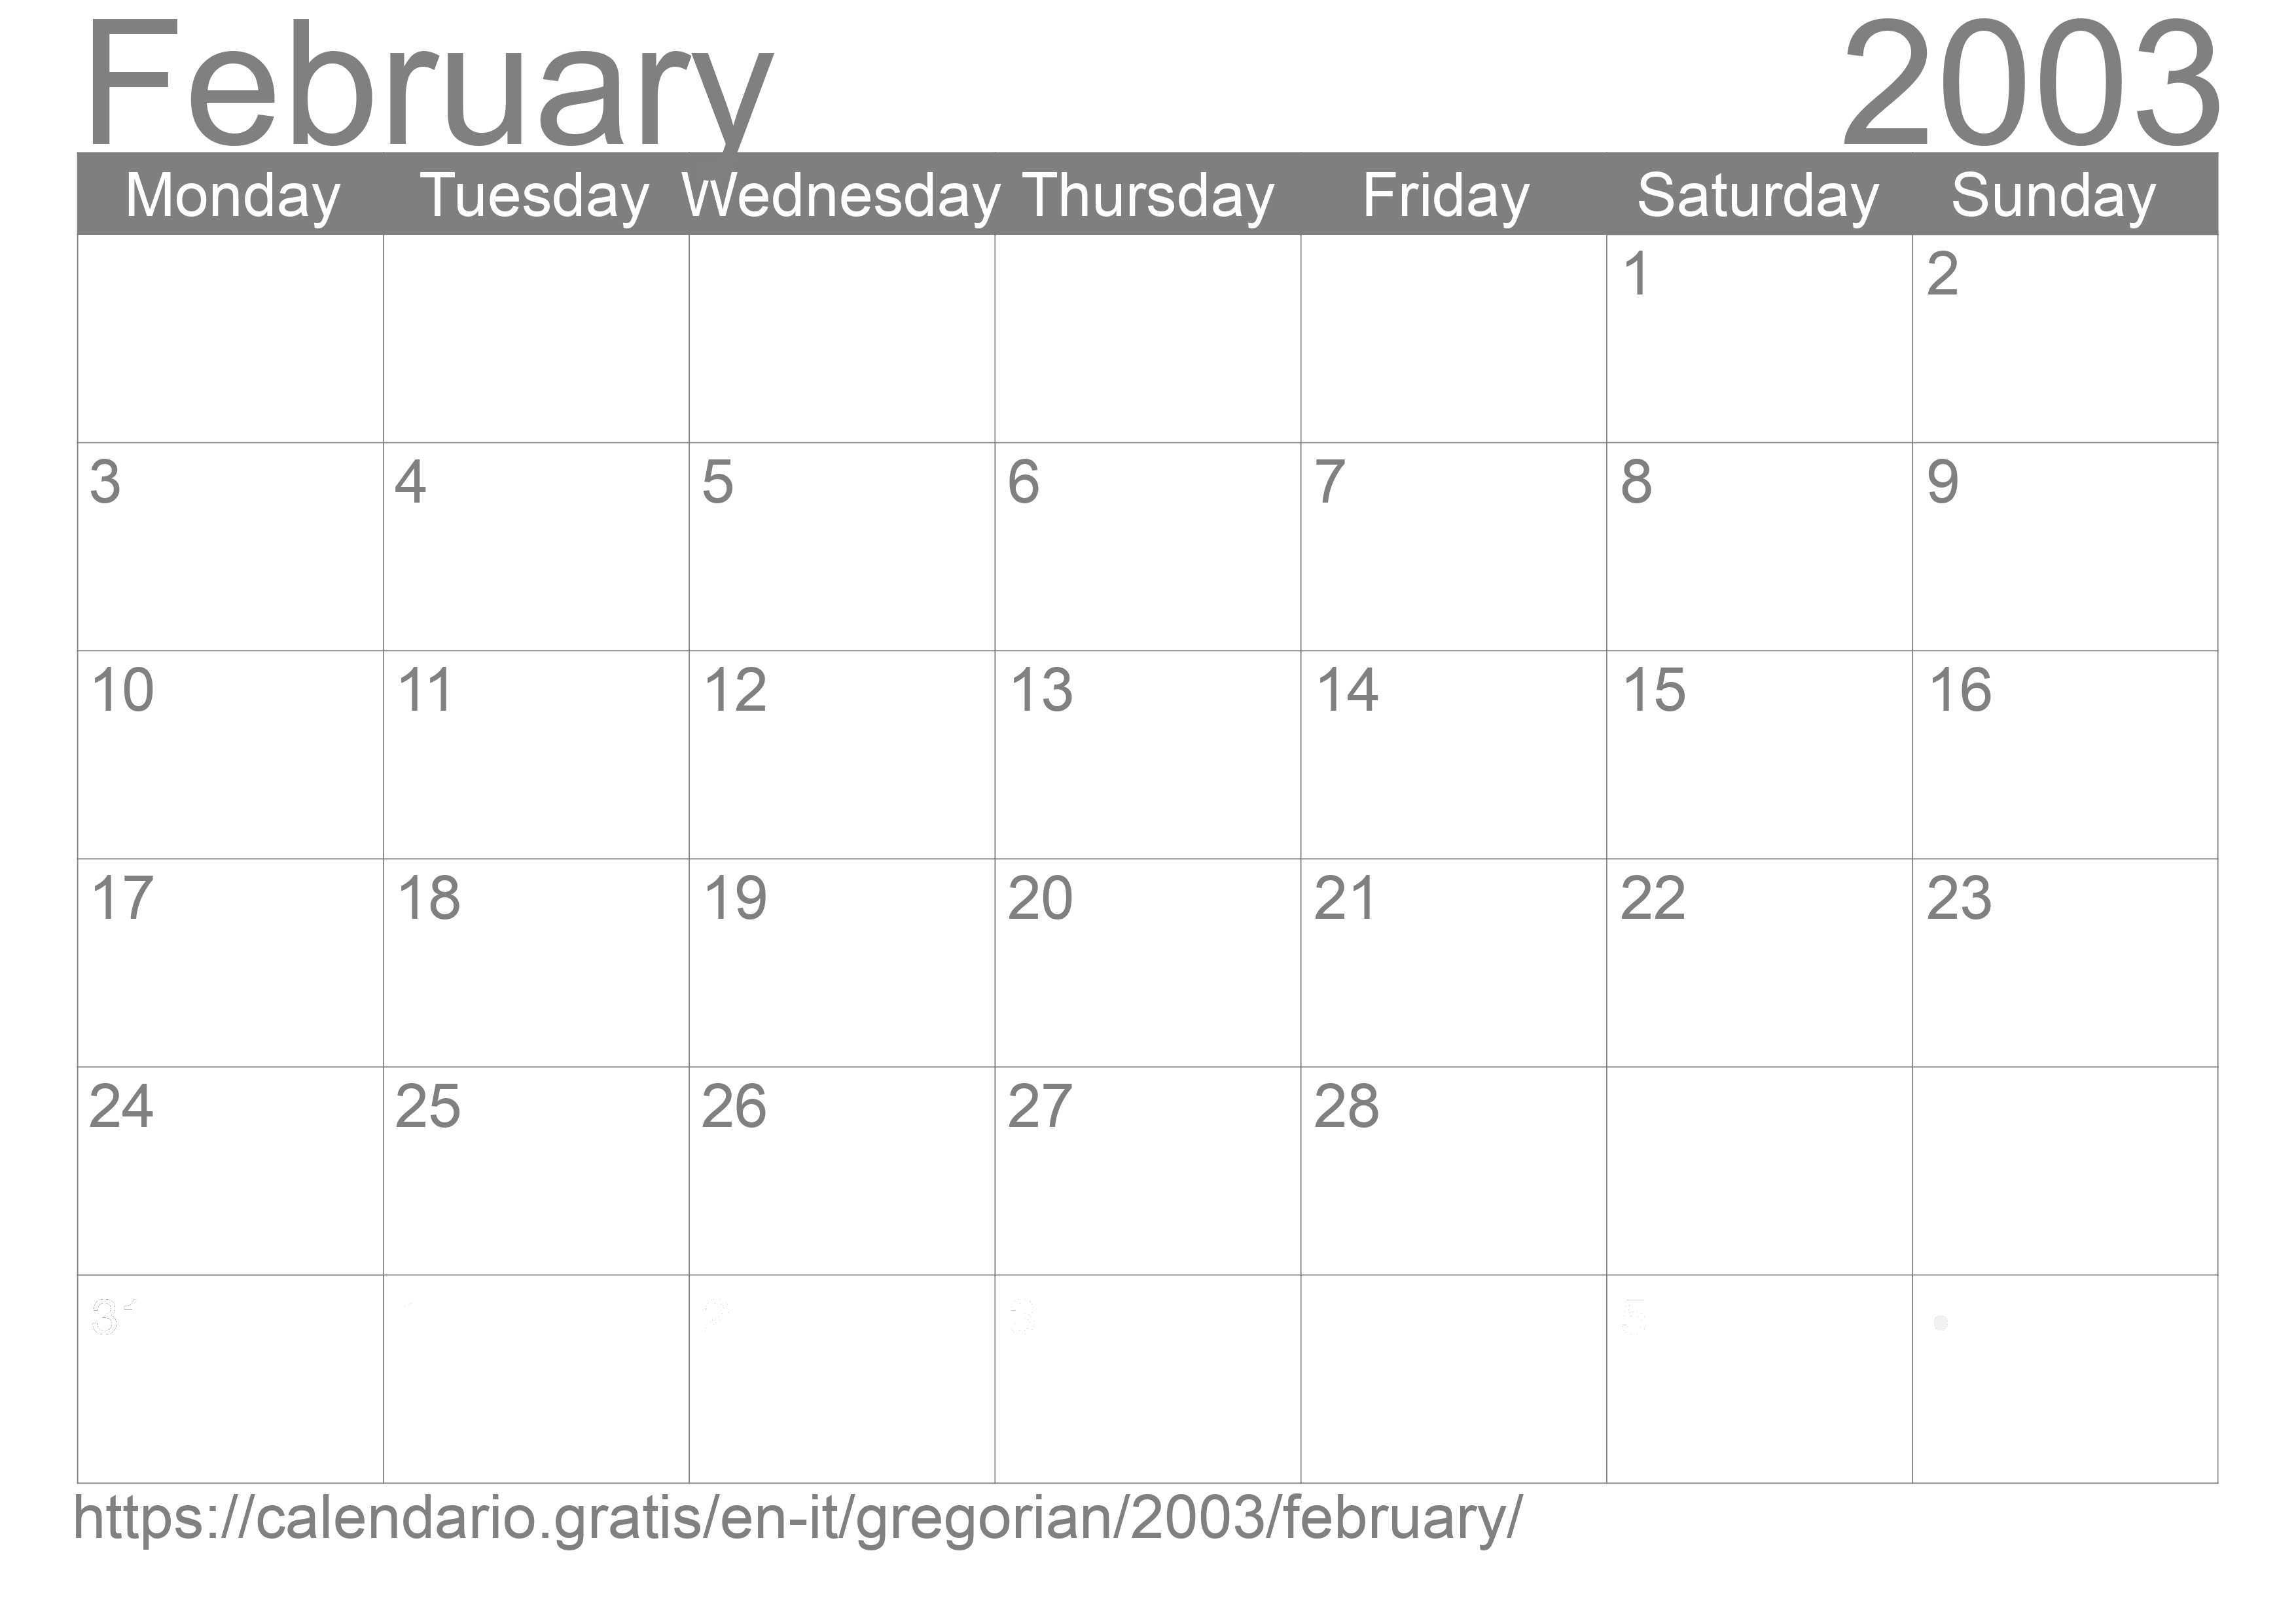 Calendar February 2003 to print